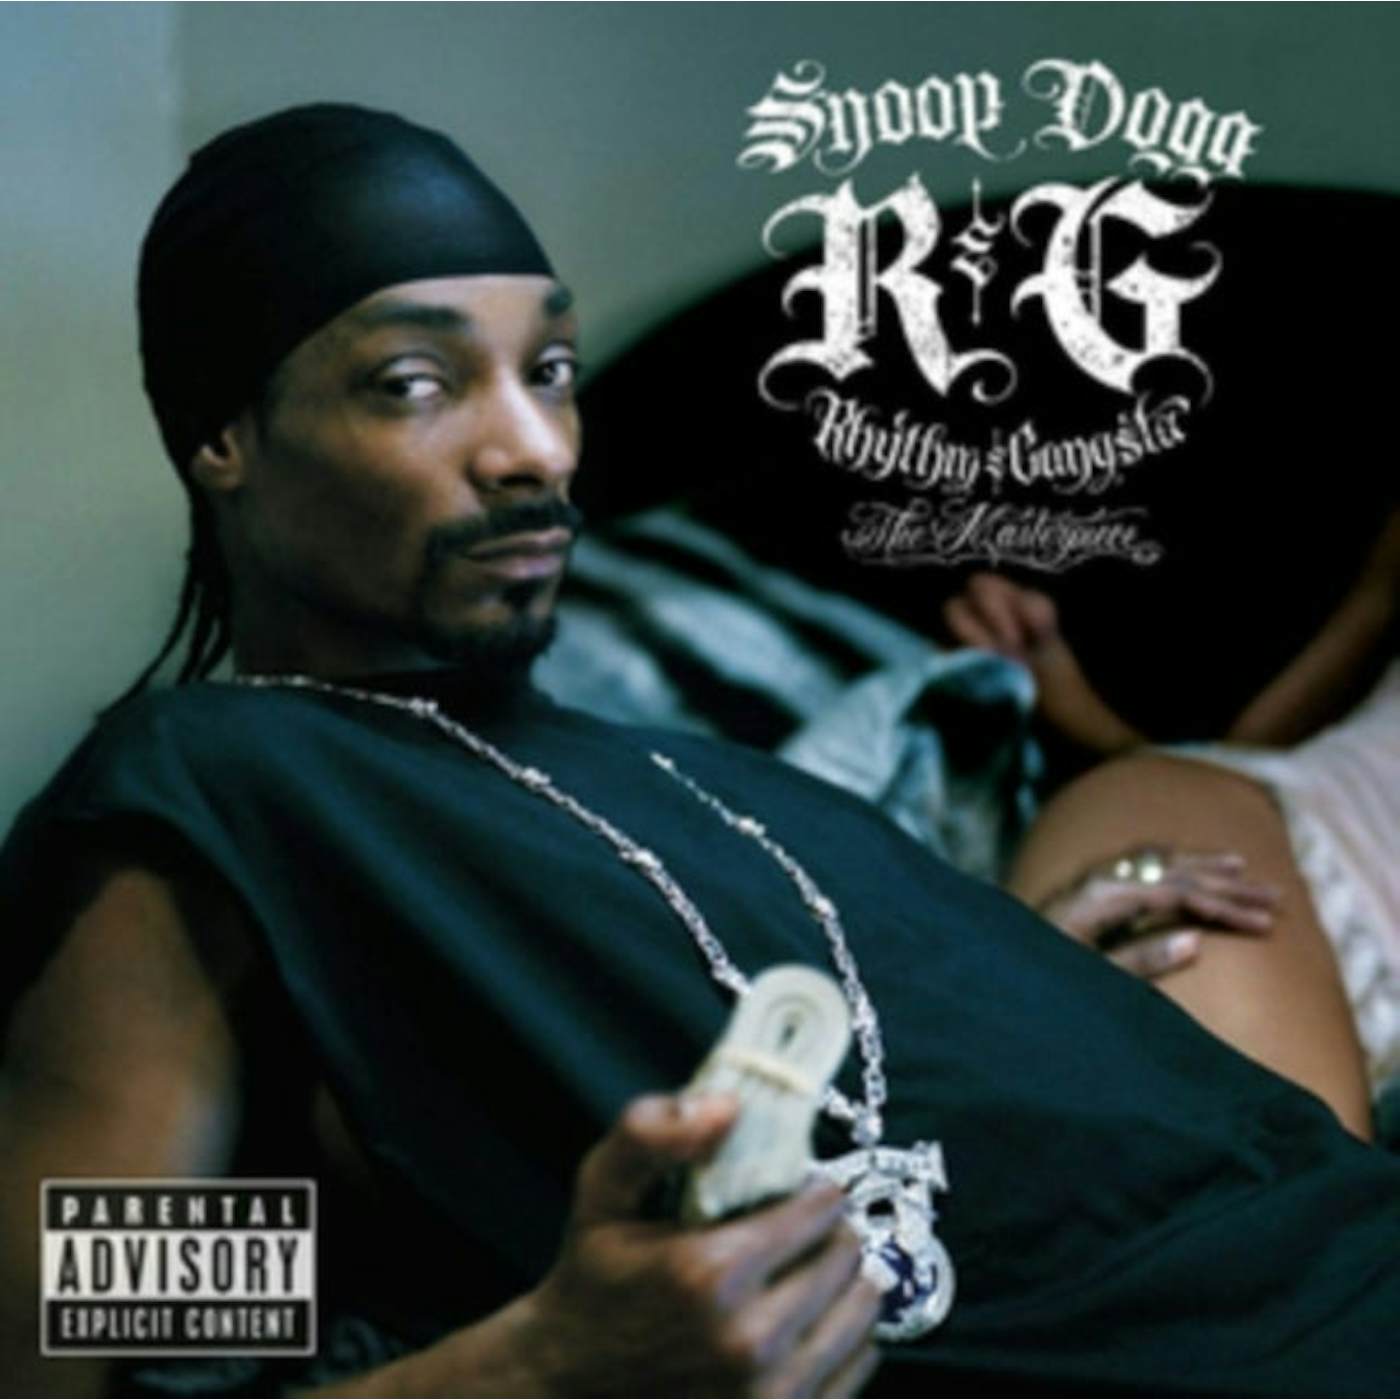 Snoop Dogg LP Vinyl Record - R&G (Rhythm & Gangs)